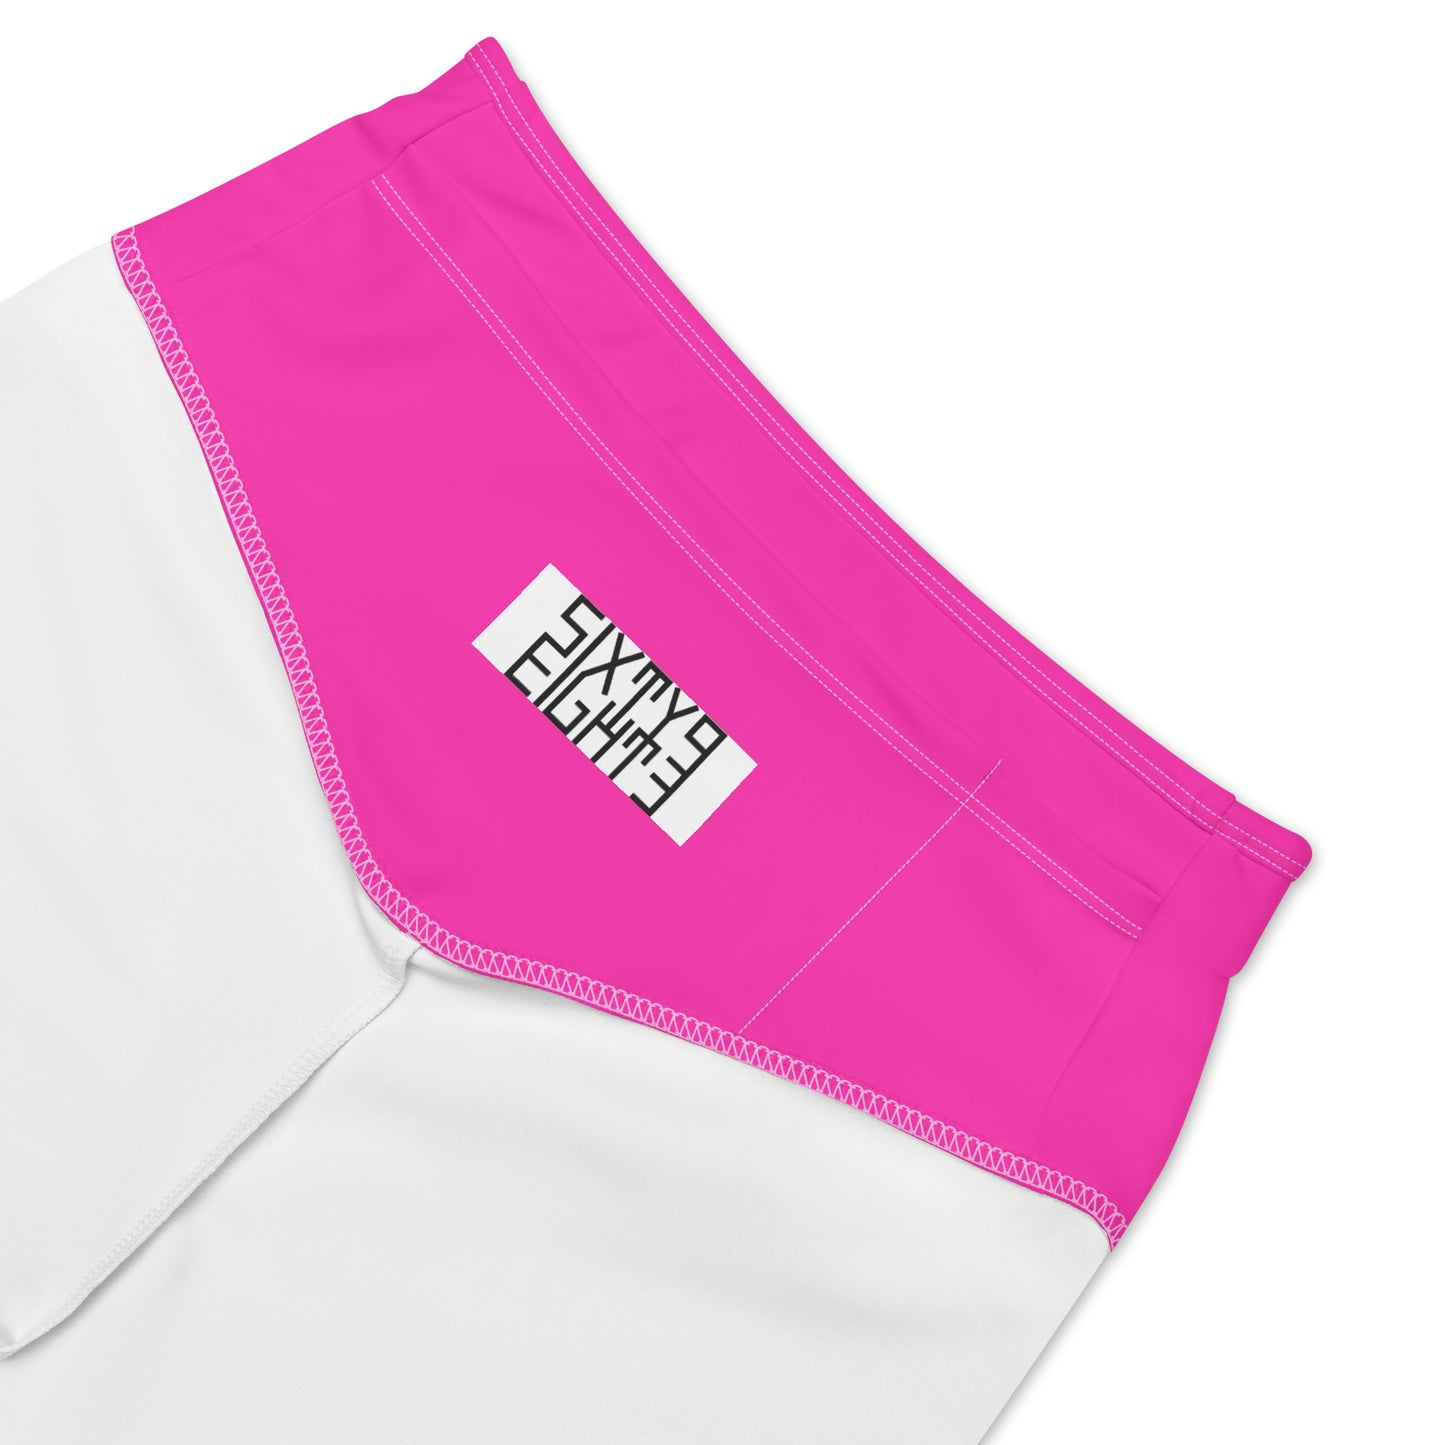 Sixty Eight 93 Logo White & Fuchsia Biker Shorts